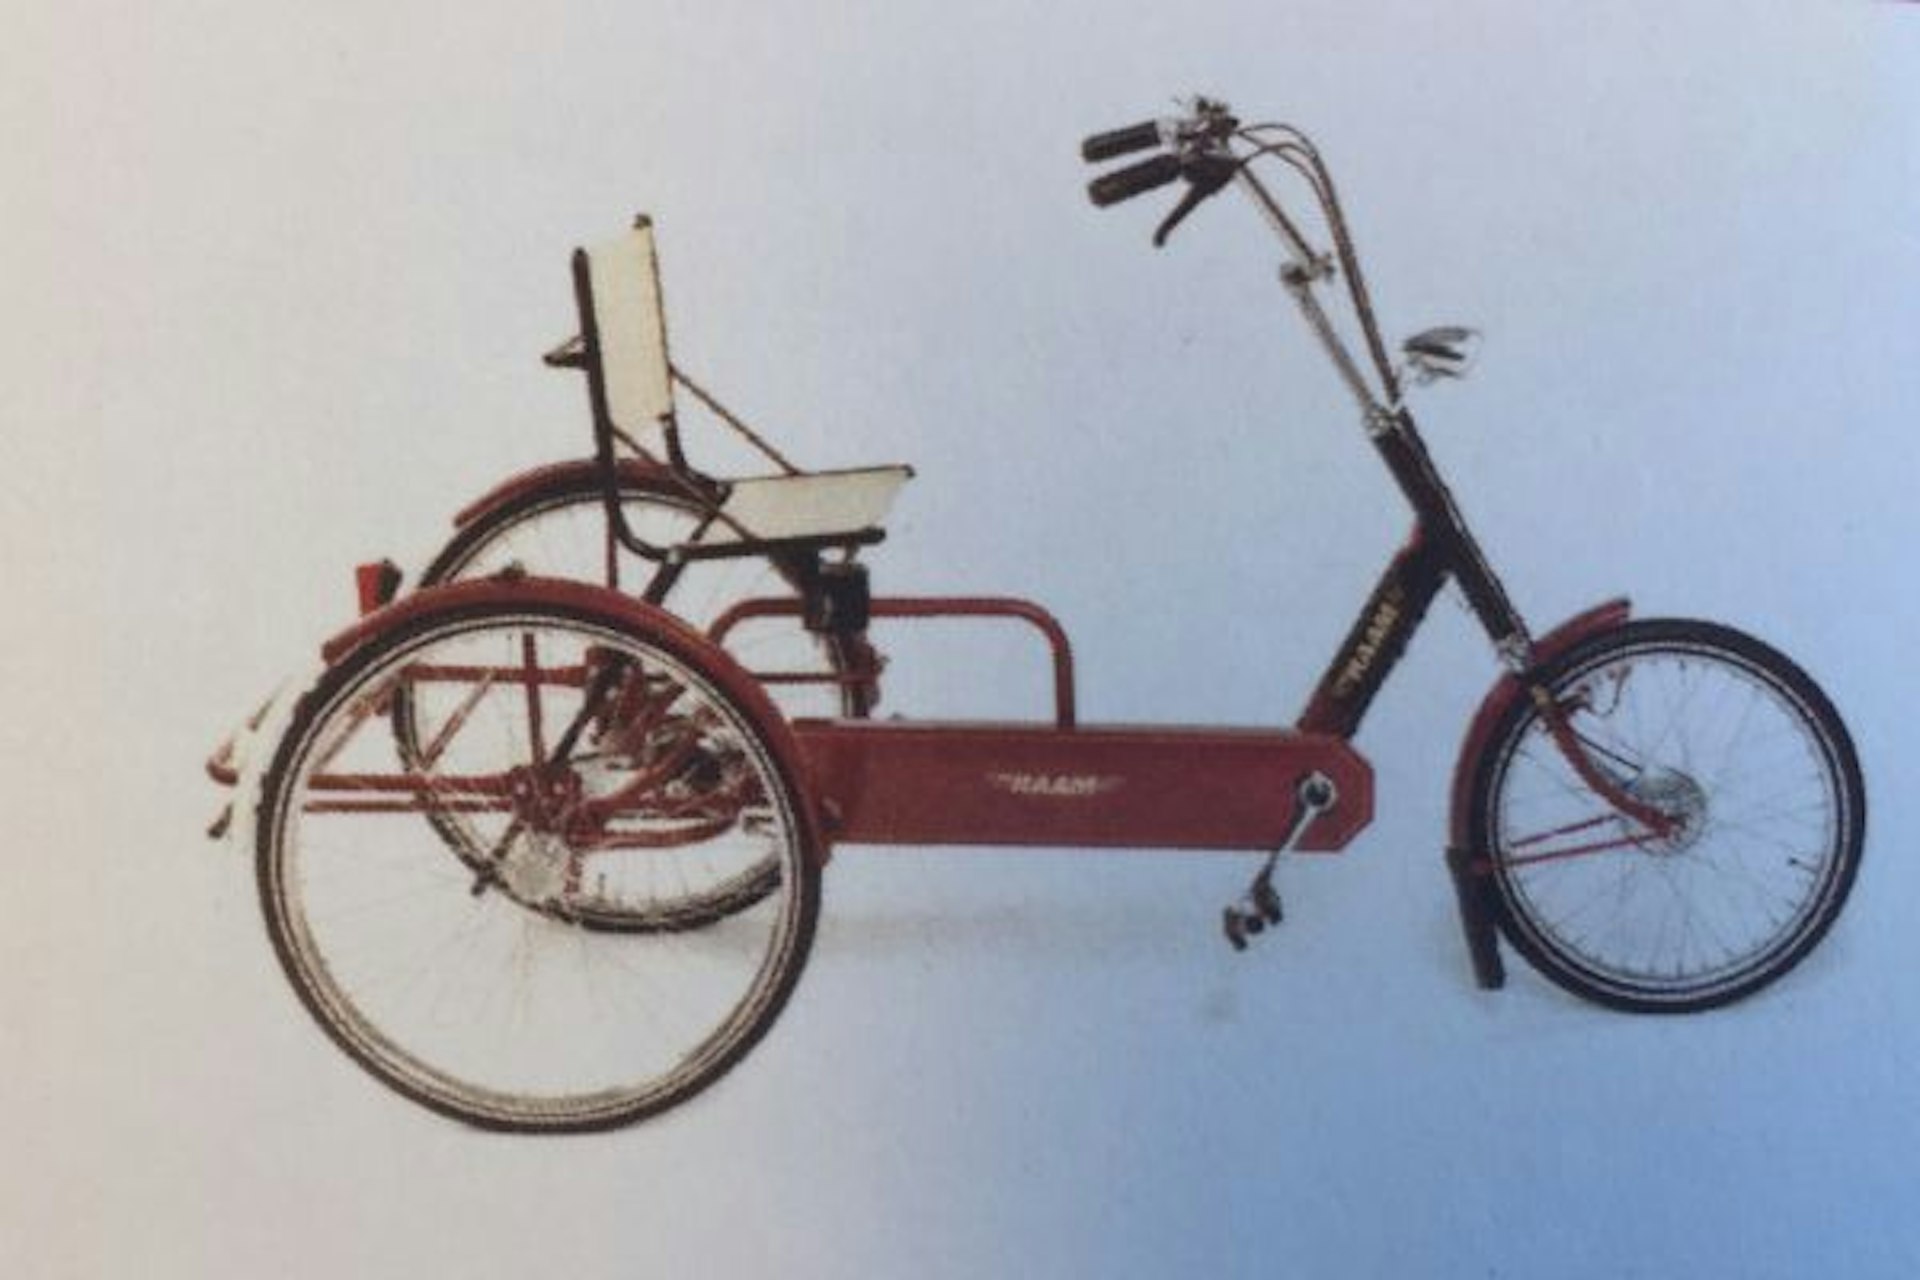 Sesselrad von Van Raam aus 1995